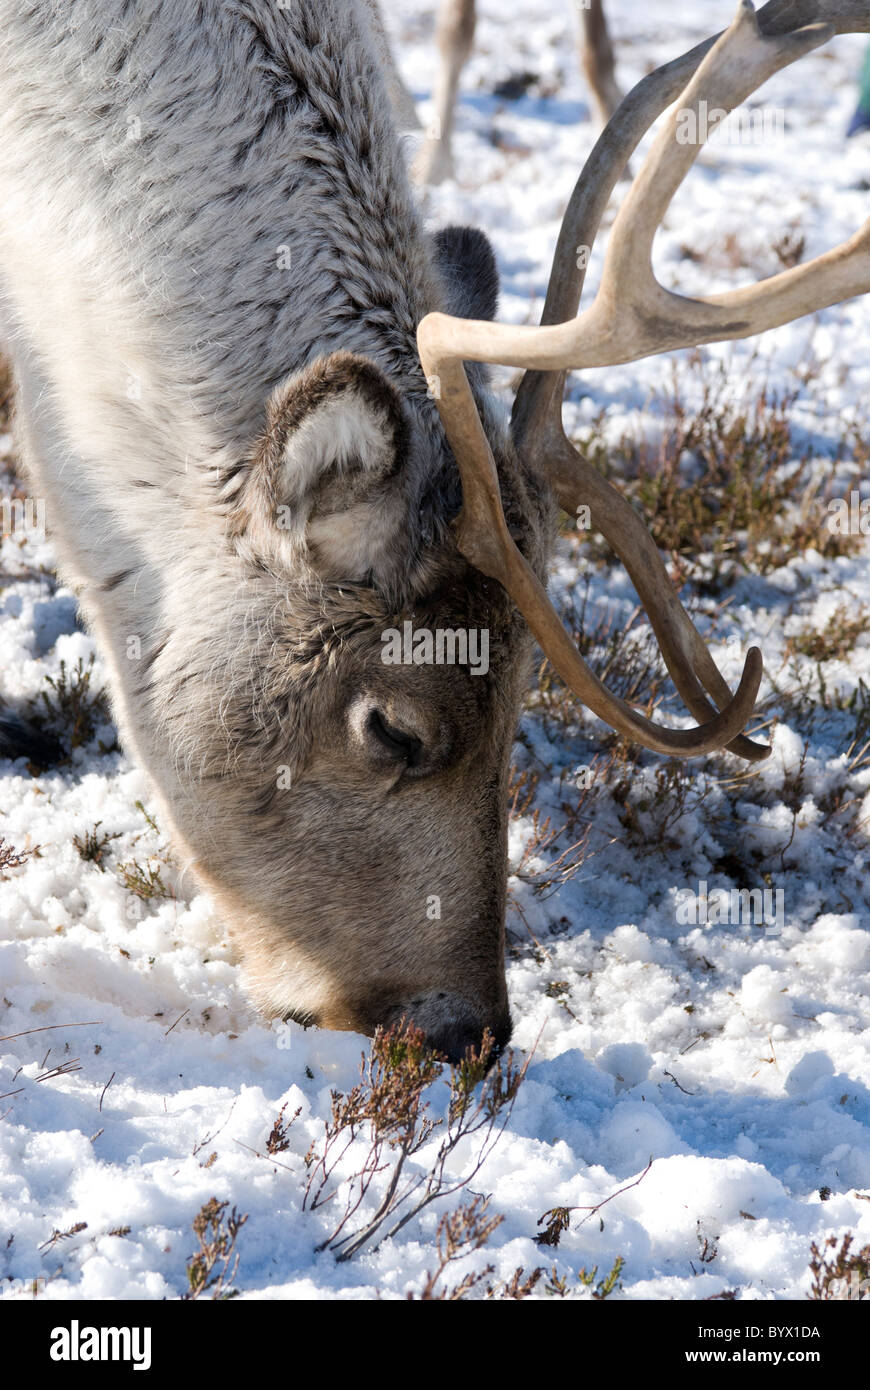 Le renne (Rangifer tarandus) browsing, femme, hiver Banque D'Images